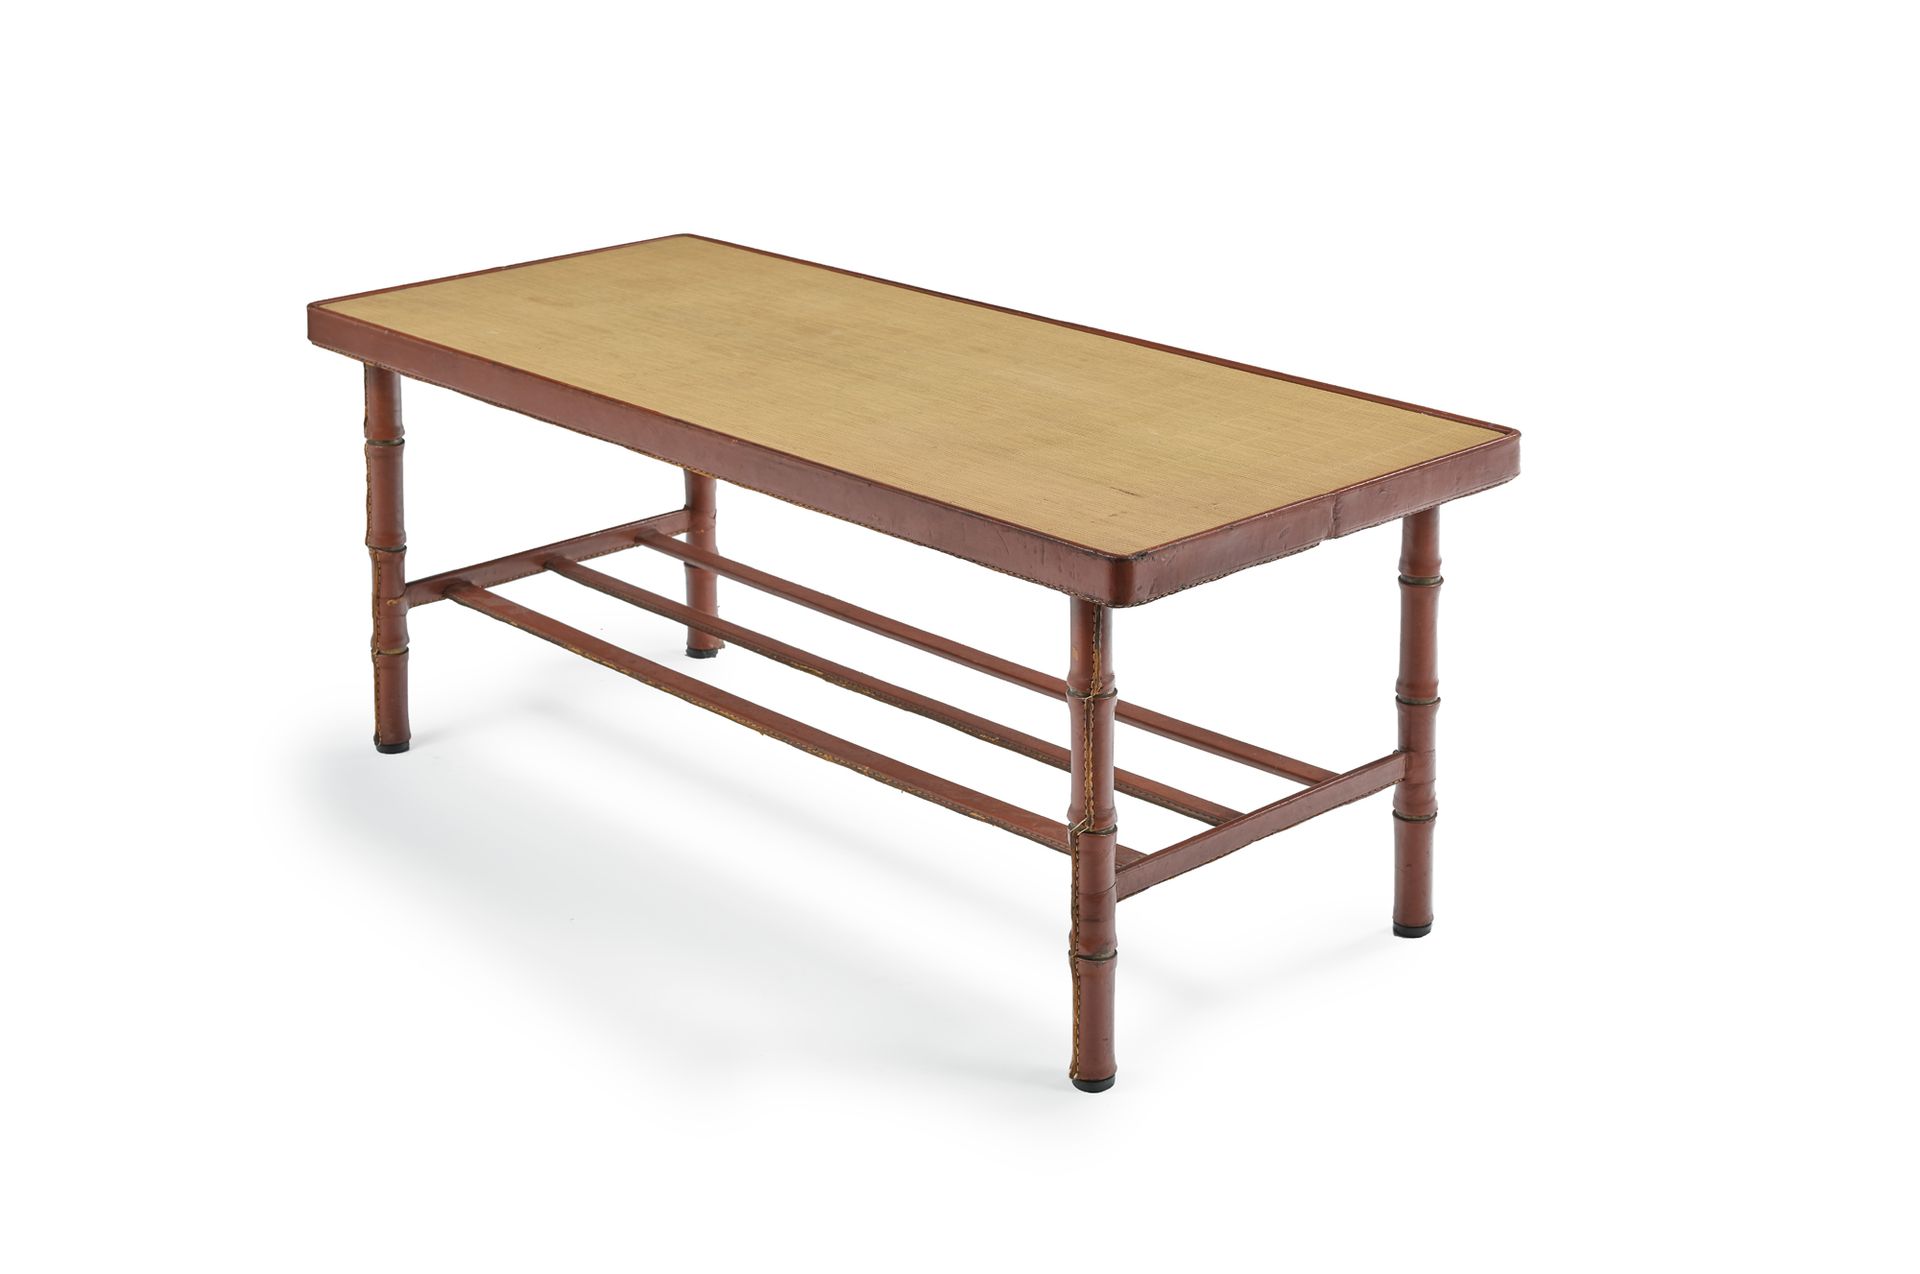 JACQUES ADNET (1900-1984) 茶几，长方形酒椰草桌面，原棕色皮革覆盖的支架腿
大约1940-1950年
高：46厘米 宽：106厘米 深：&hellip;